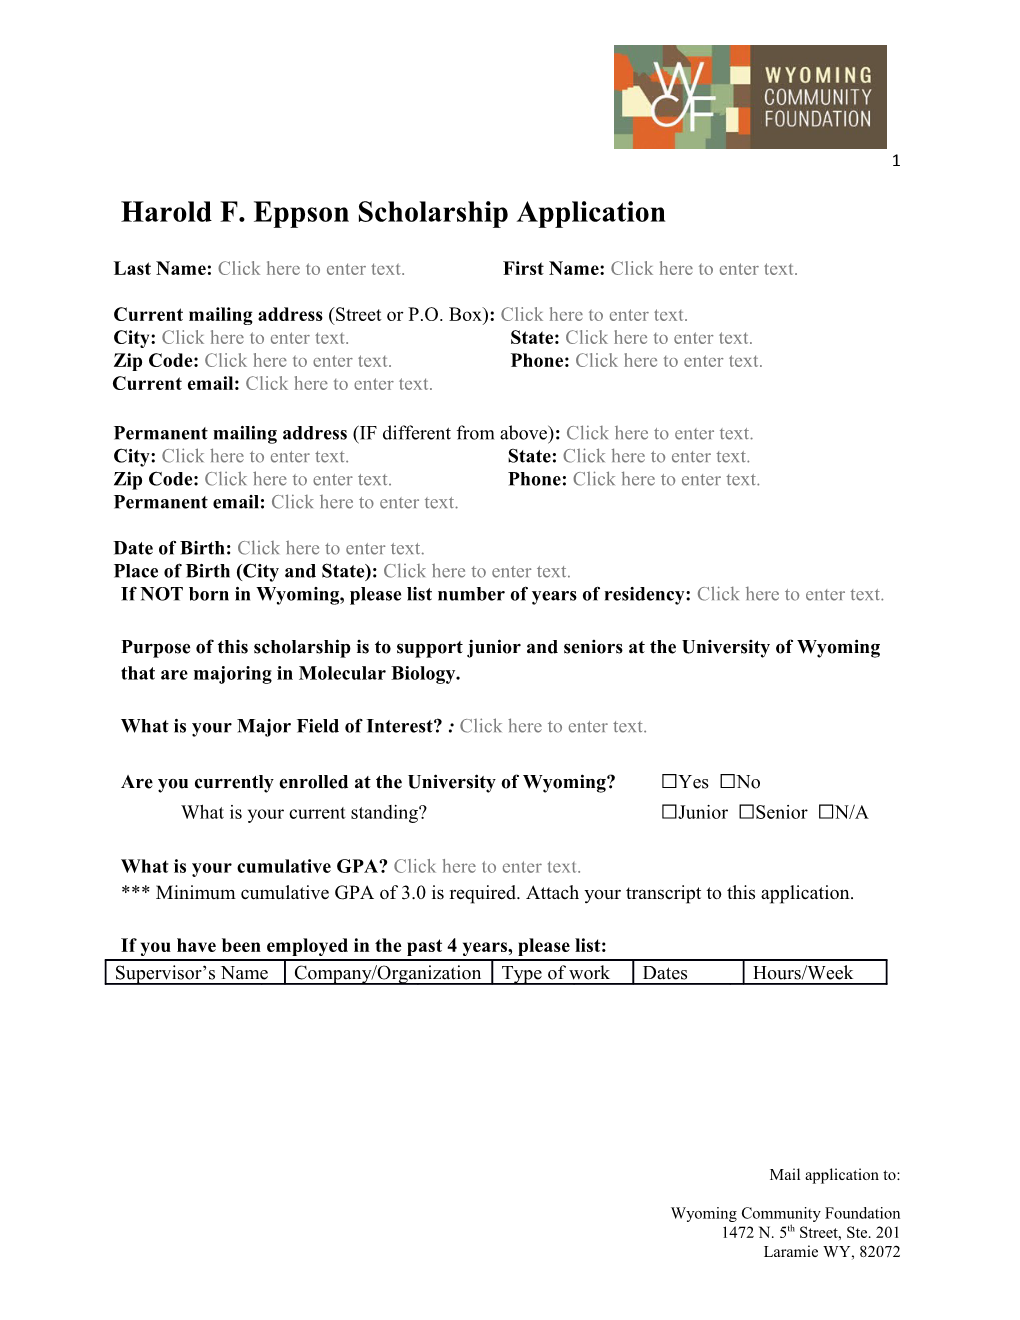 Harold F. Eppson Scholarship Application